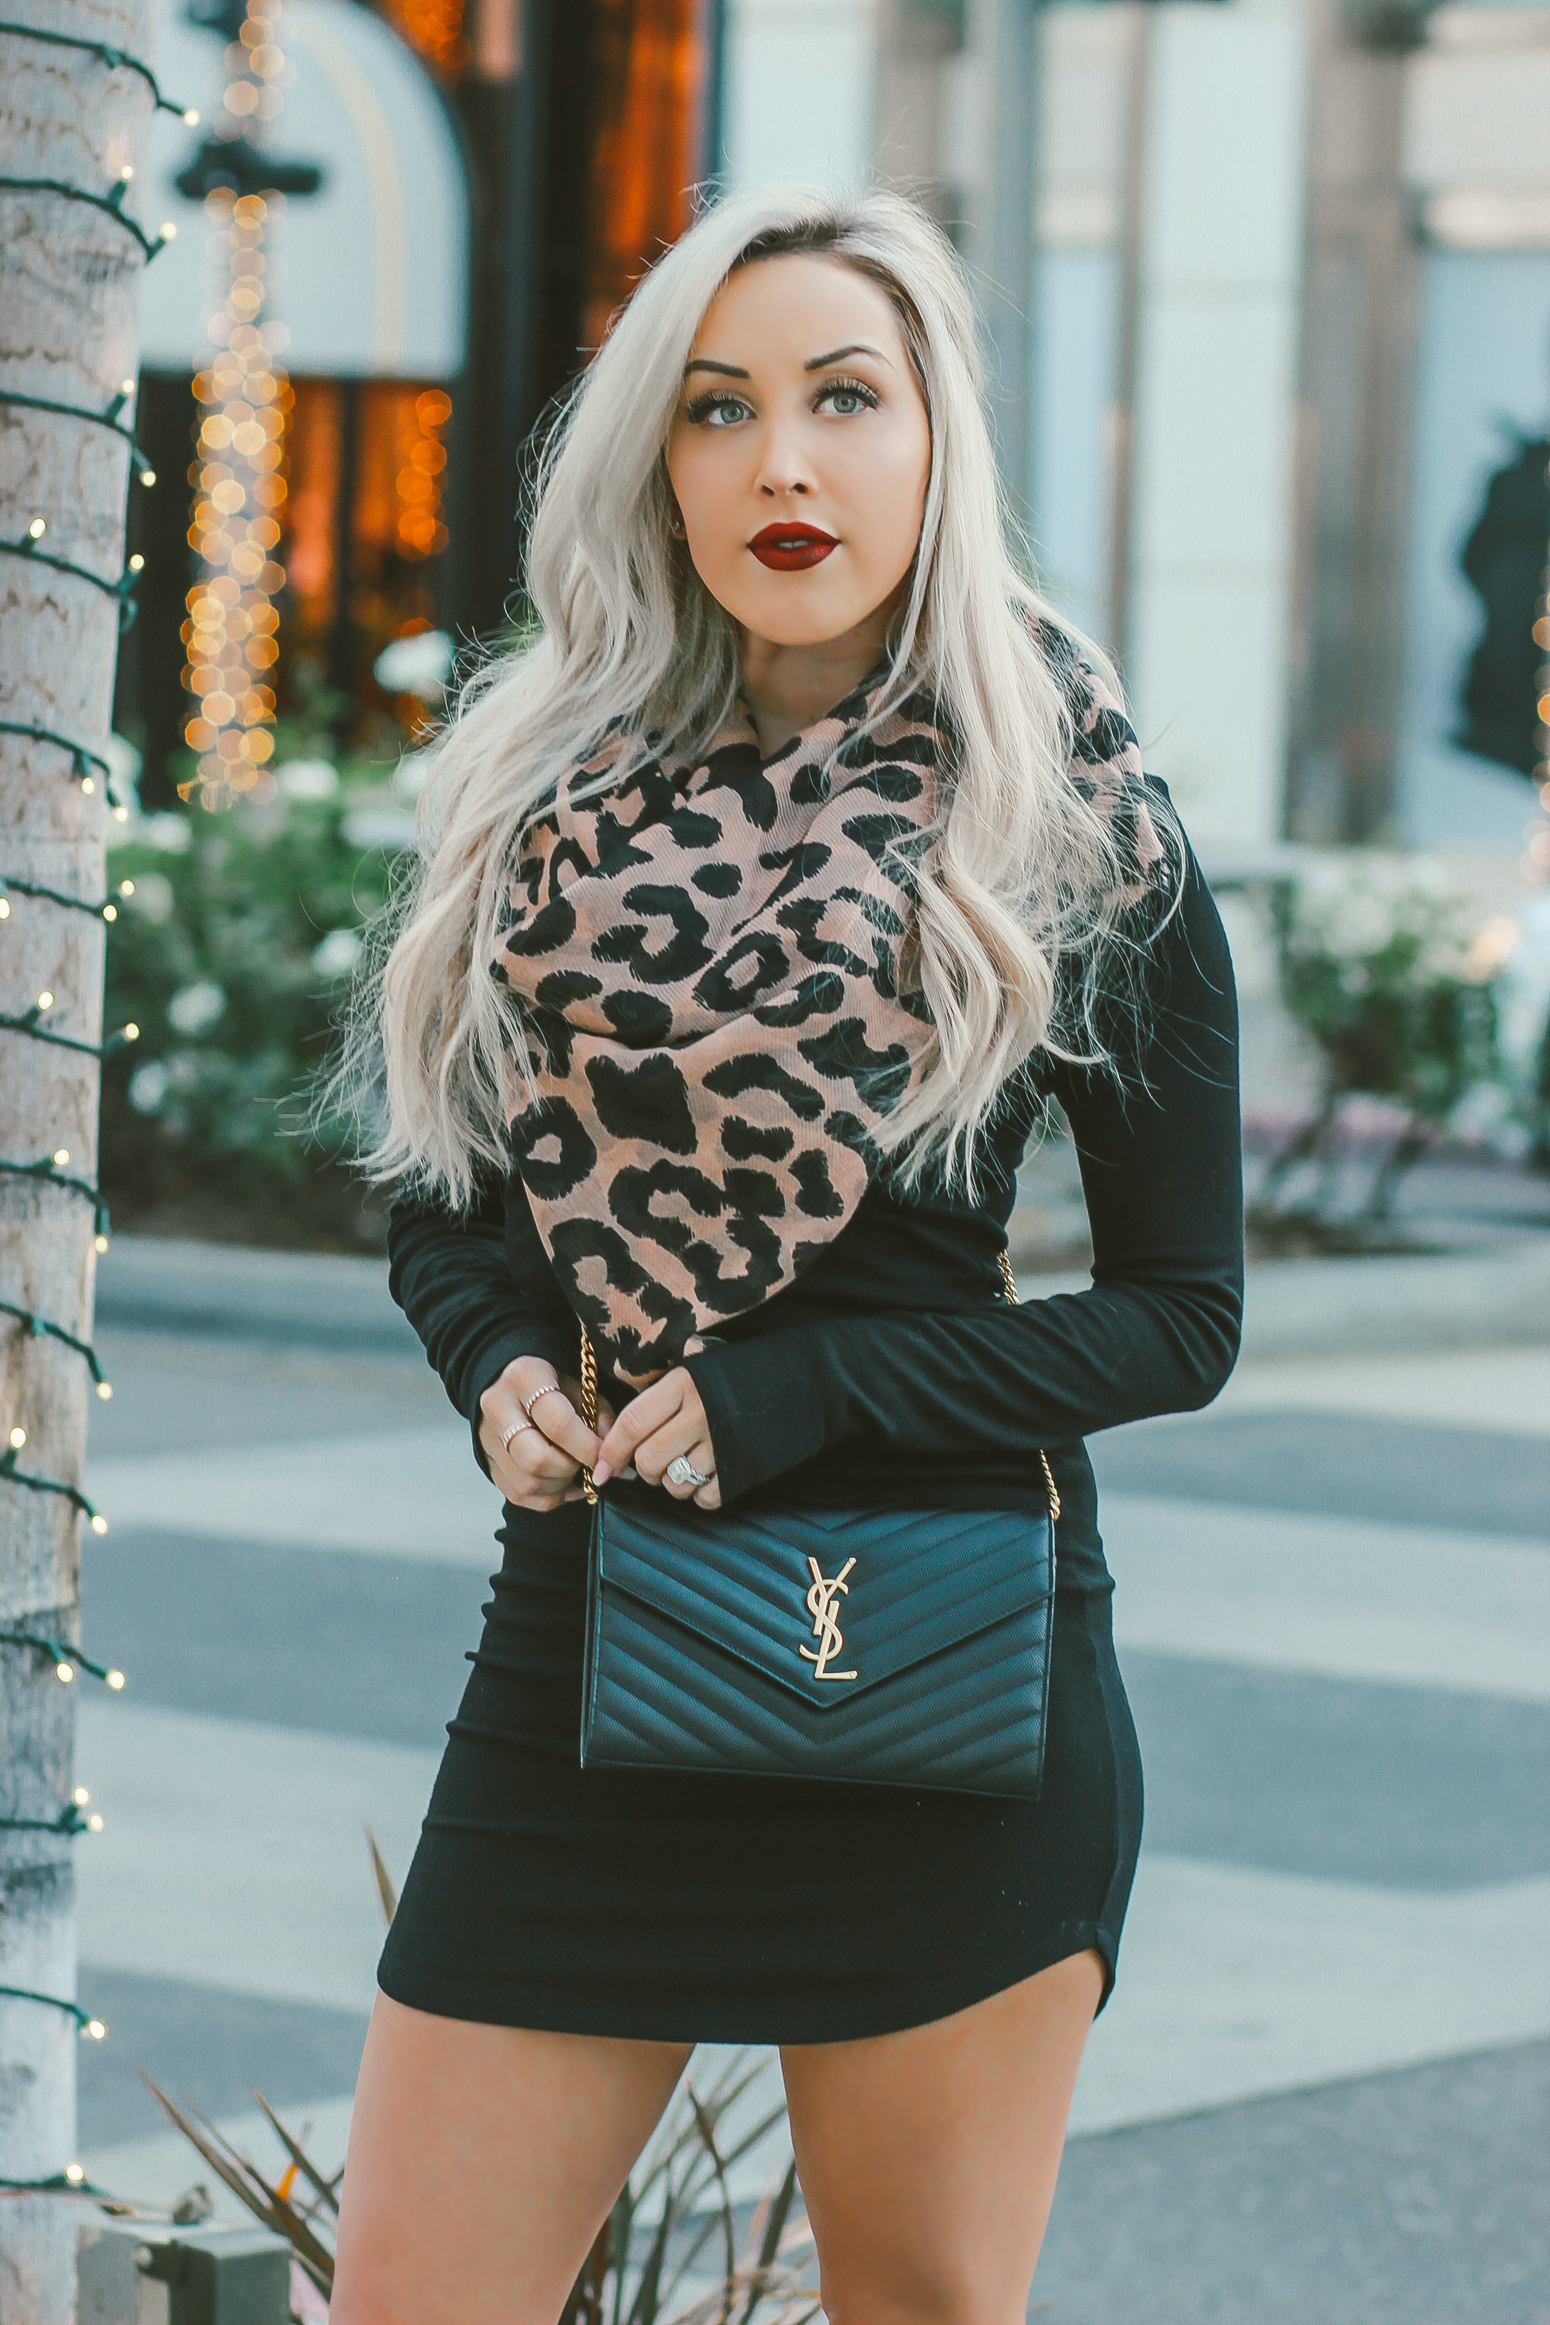 Blondie in the City | Black Sweater Dress, Leopard Scarf | Black Faux Fur Loafers | Black YSL Bag